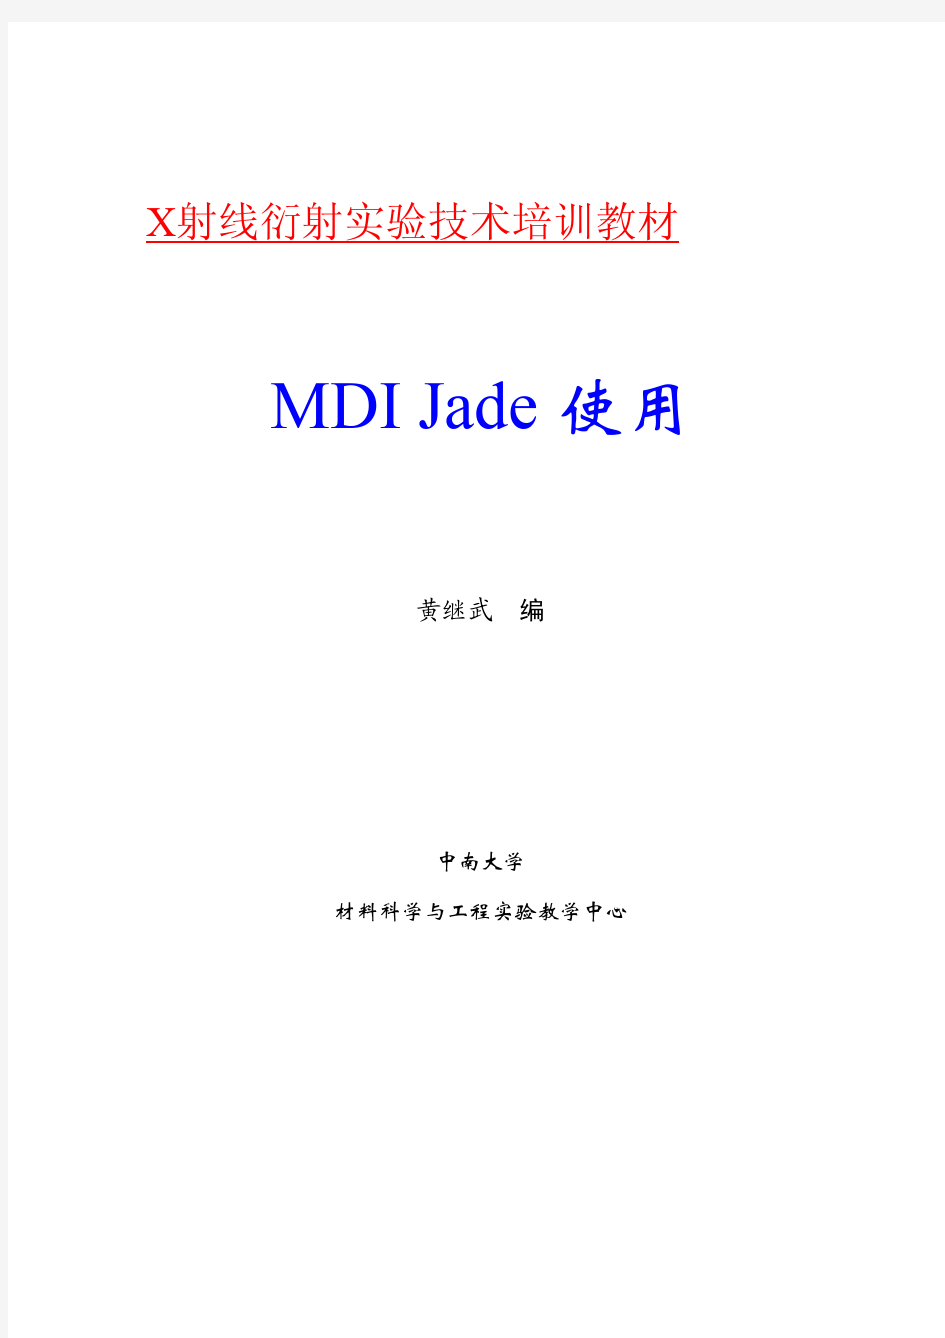 MDI Jade 使用手册 第四版